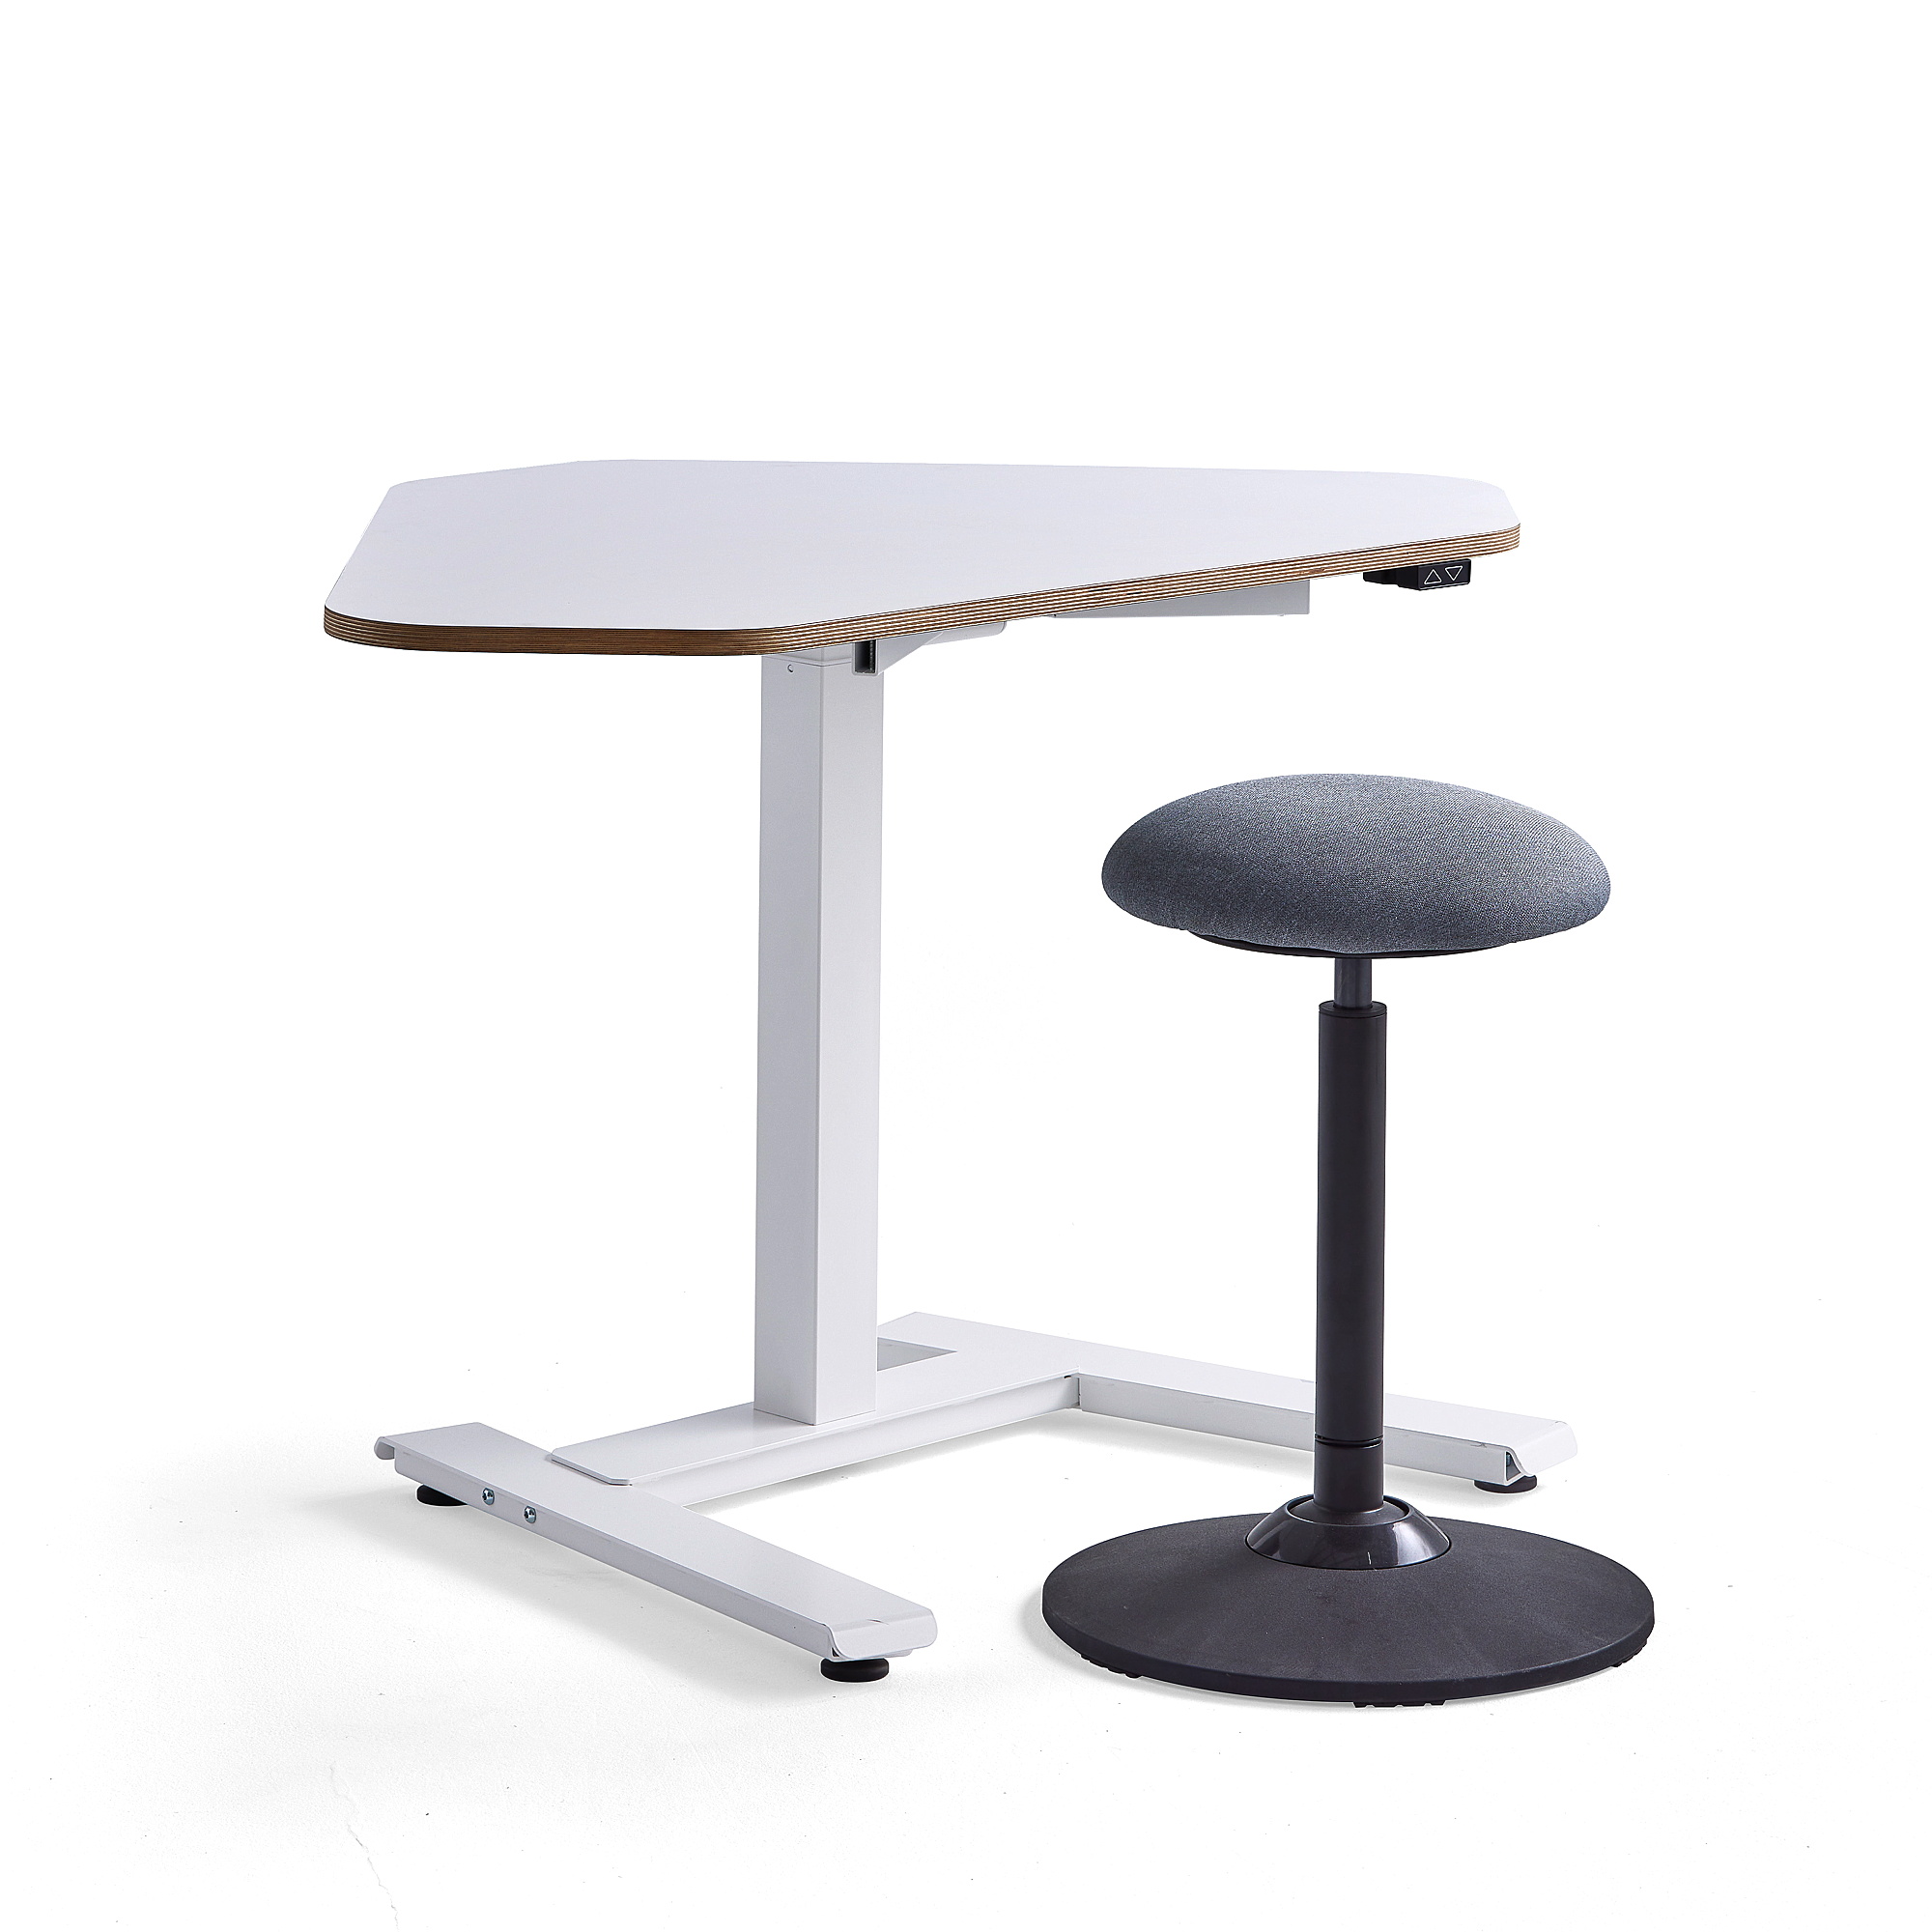 Zostava nábytku: 1 biely rohový stôl Novus + 1 stolička Acton